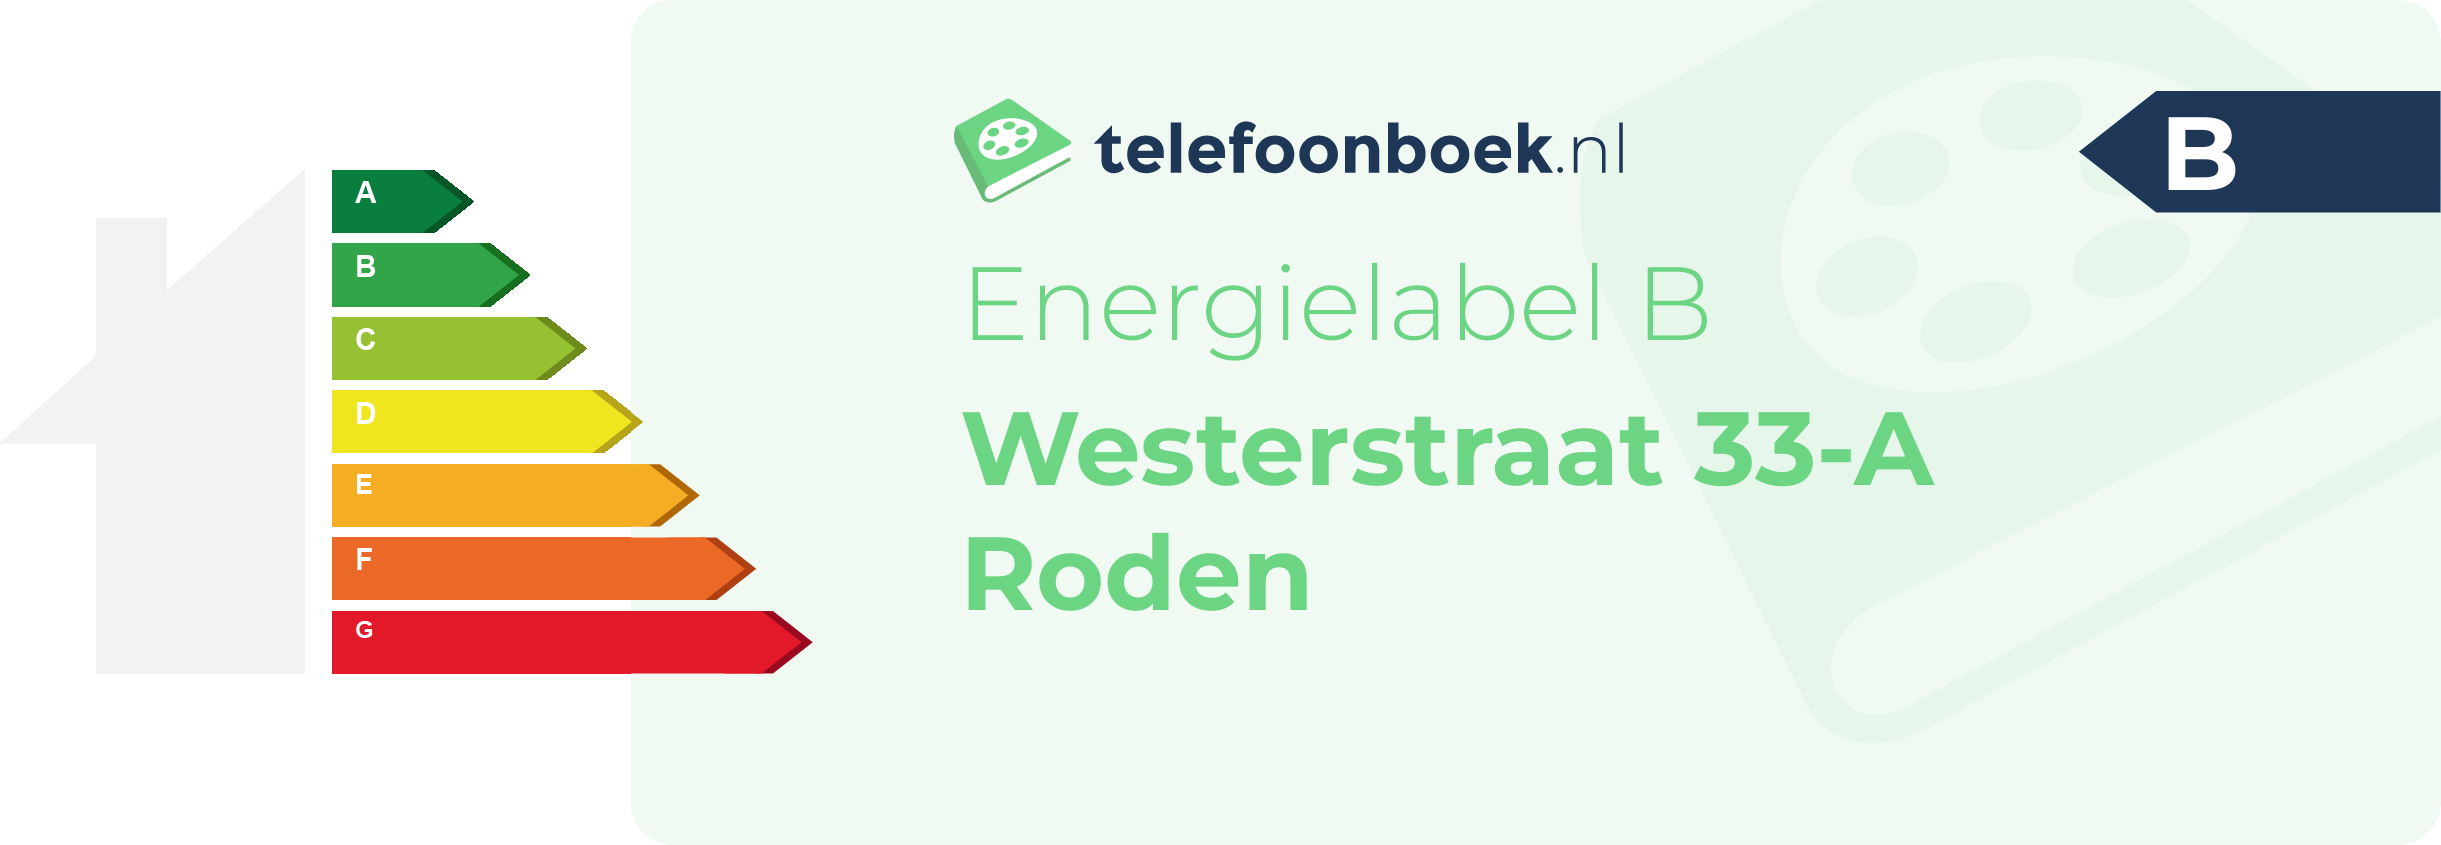 Energielabel Westerstraat 33-A Roden